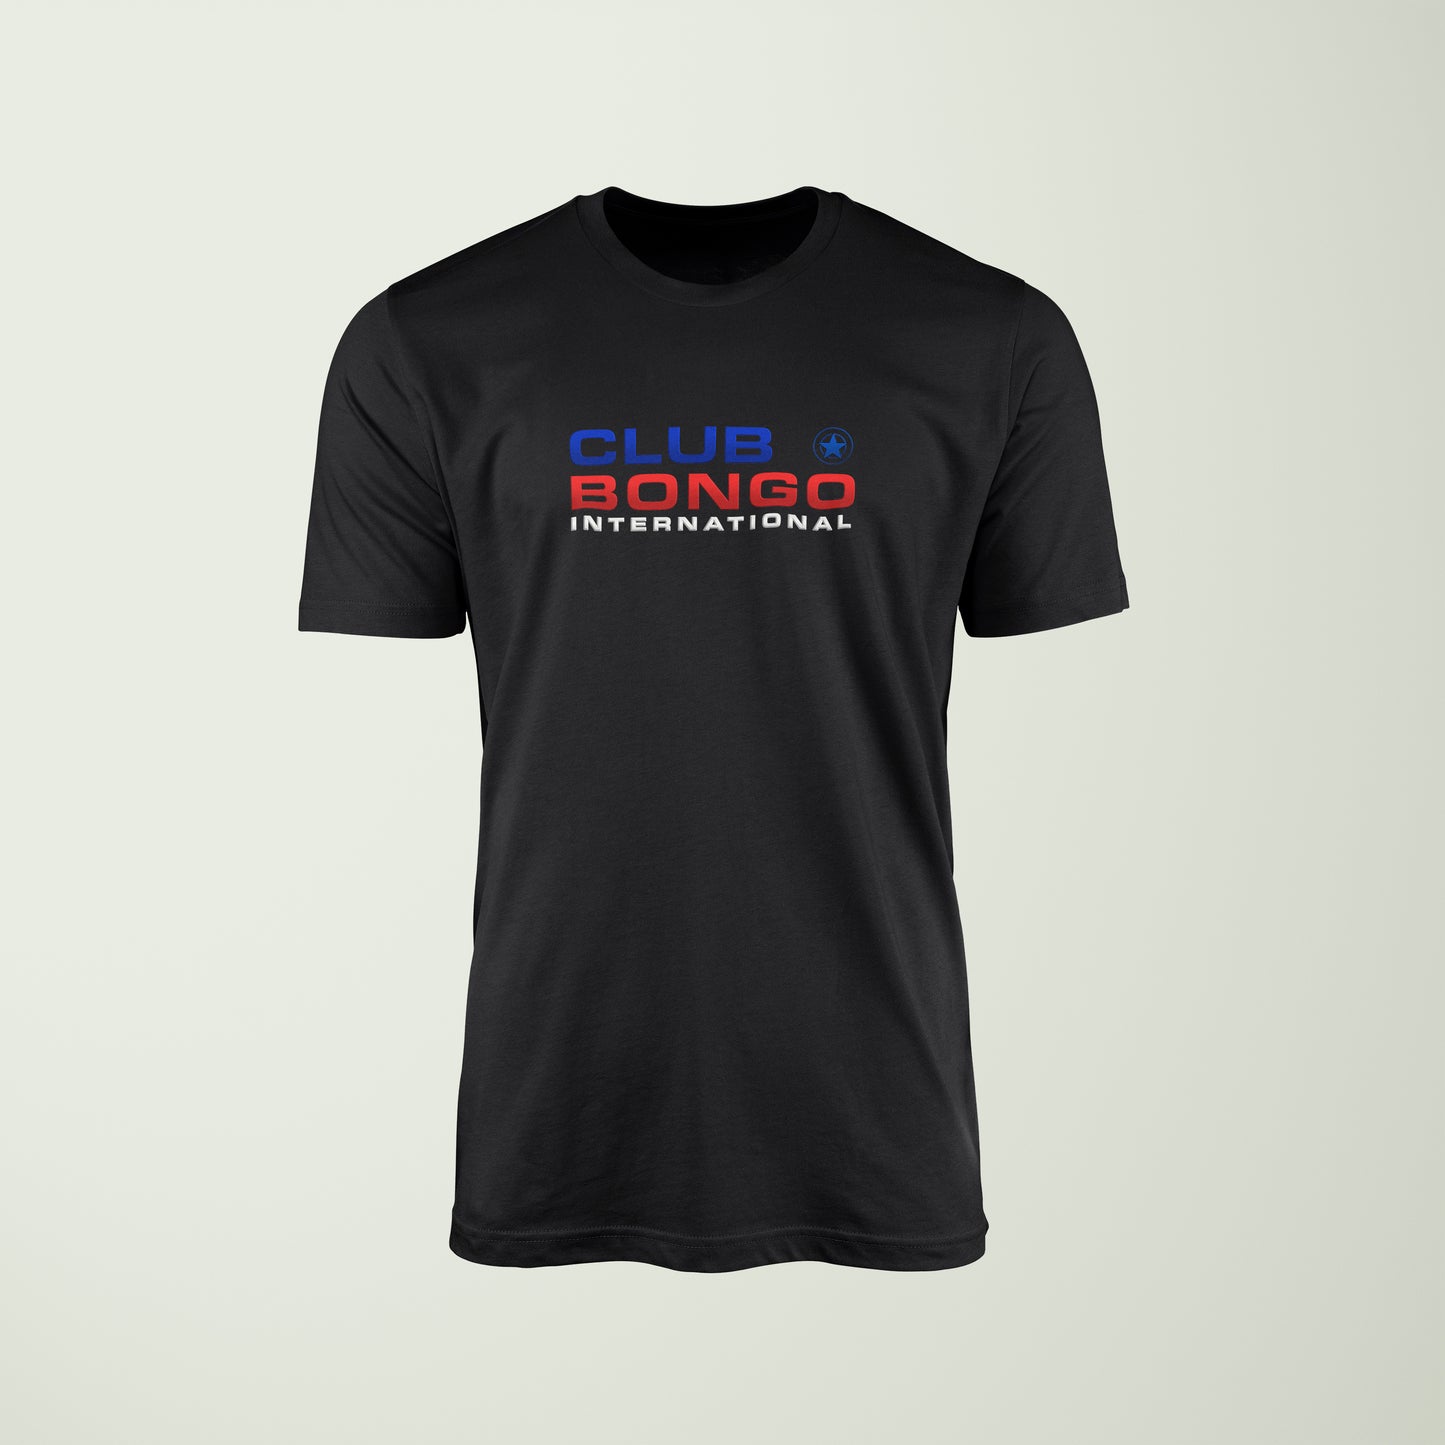 Club Bongo International T-Shirt